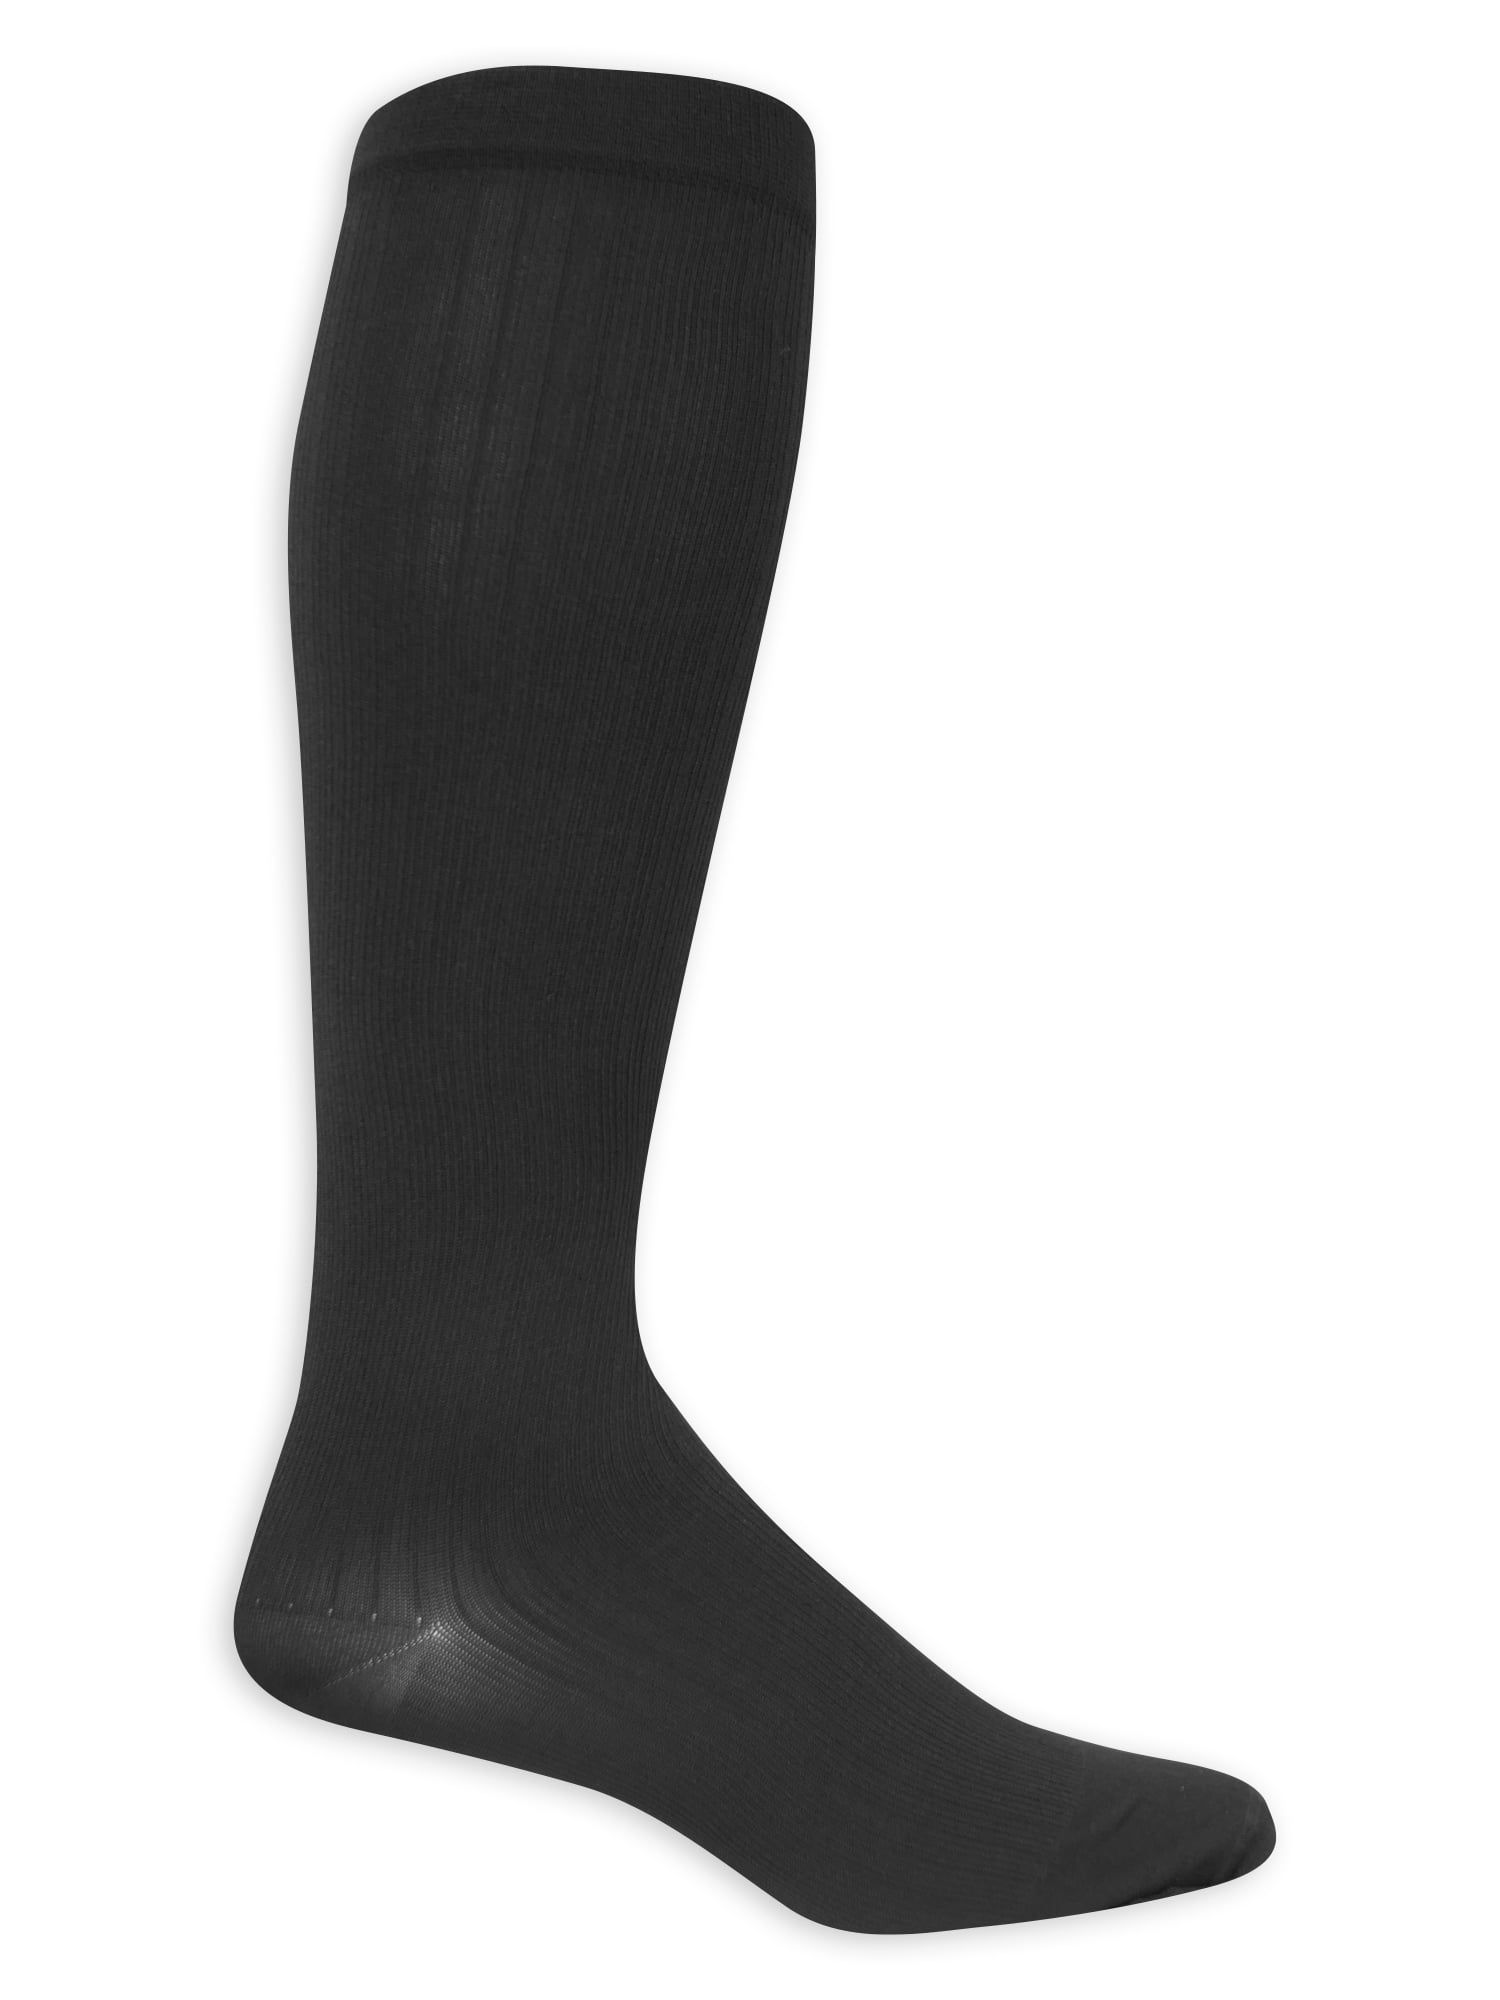 Material requirement form: Dr scholls compression socks walmart